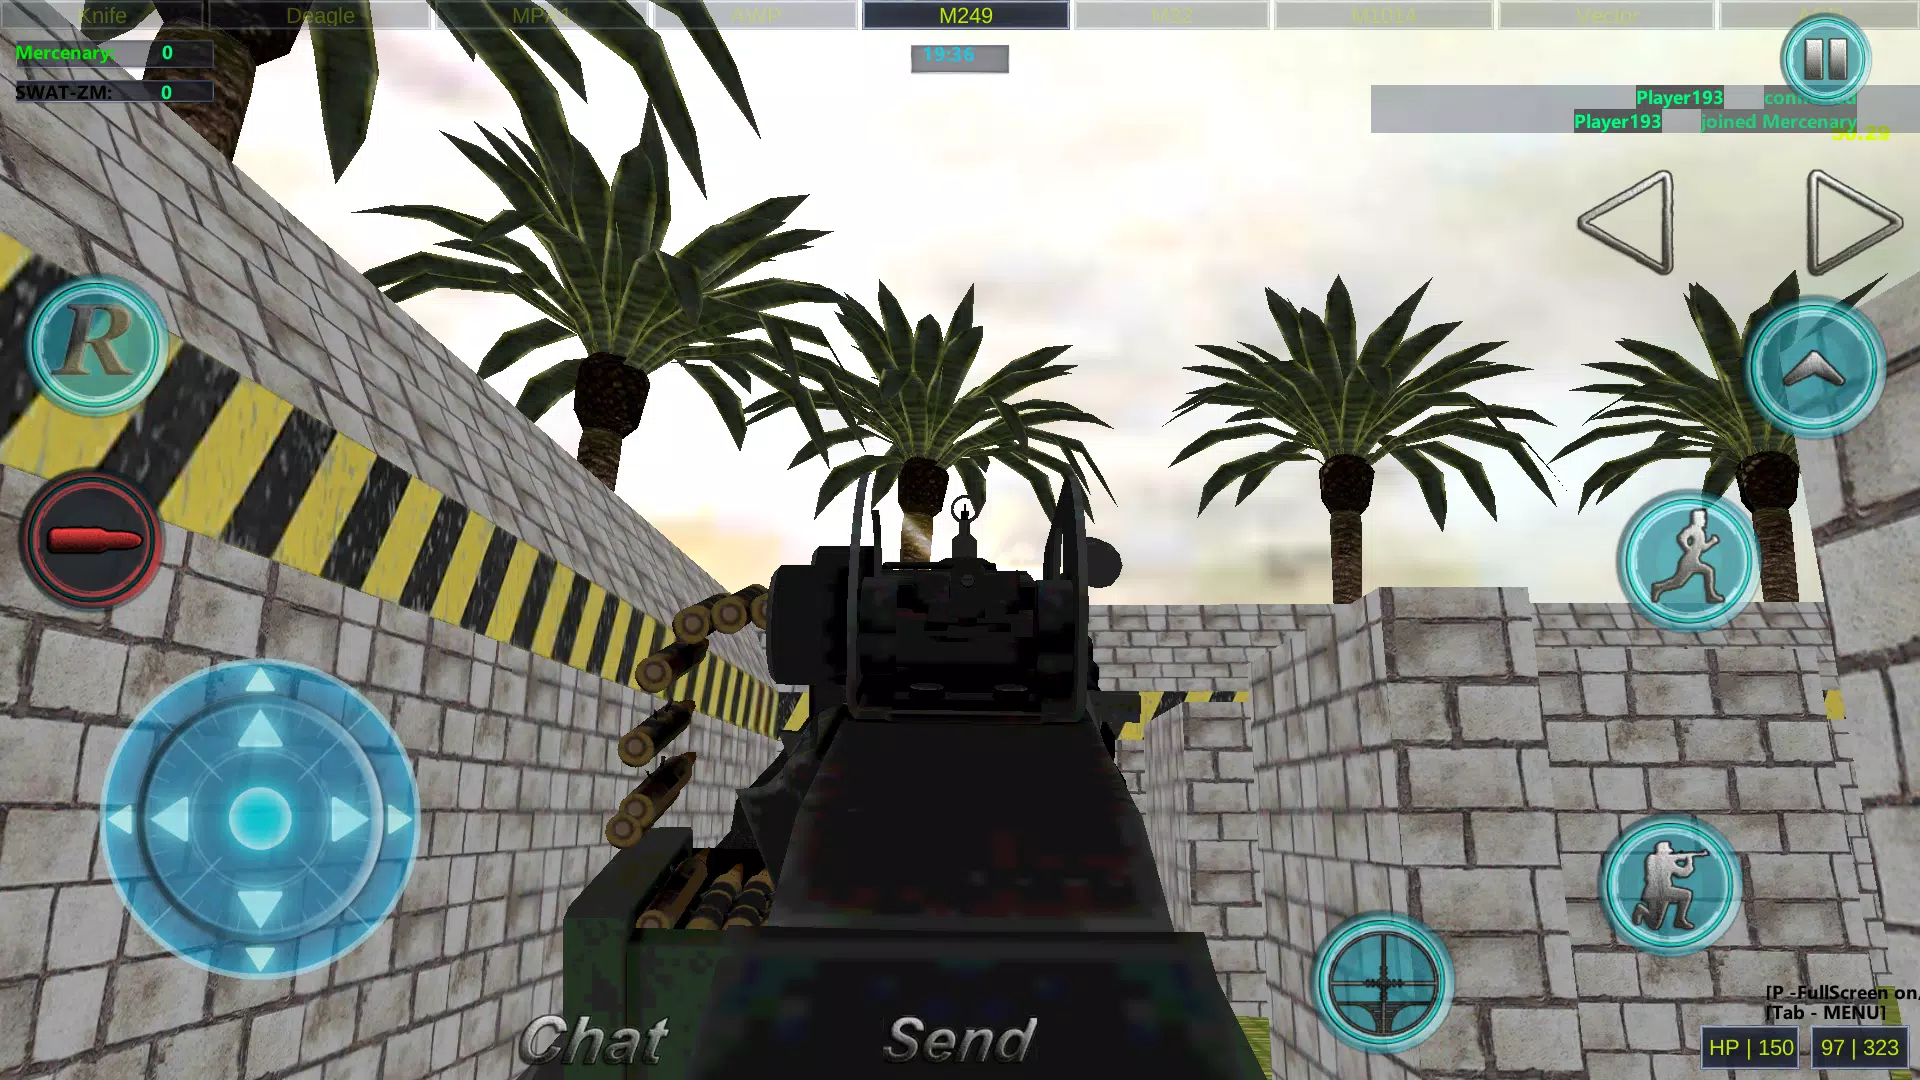 Battle S.W.A.T vs Mercenary - Online Game 🕹️